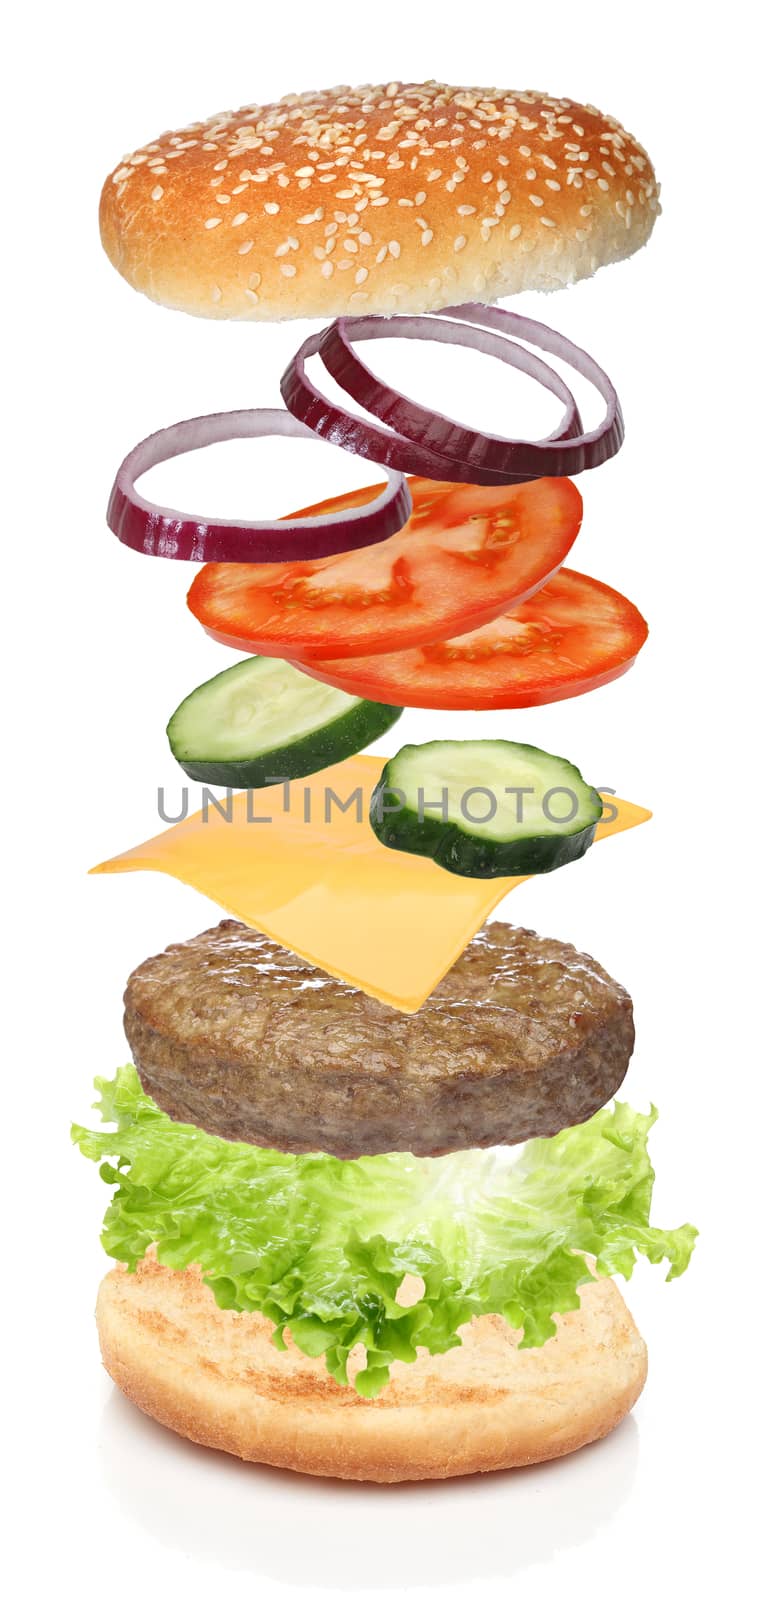 Flying ingredients of hamburger isolated on white